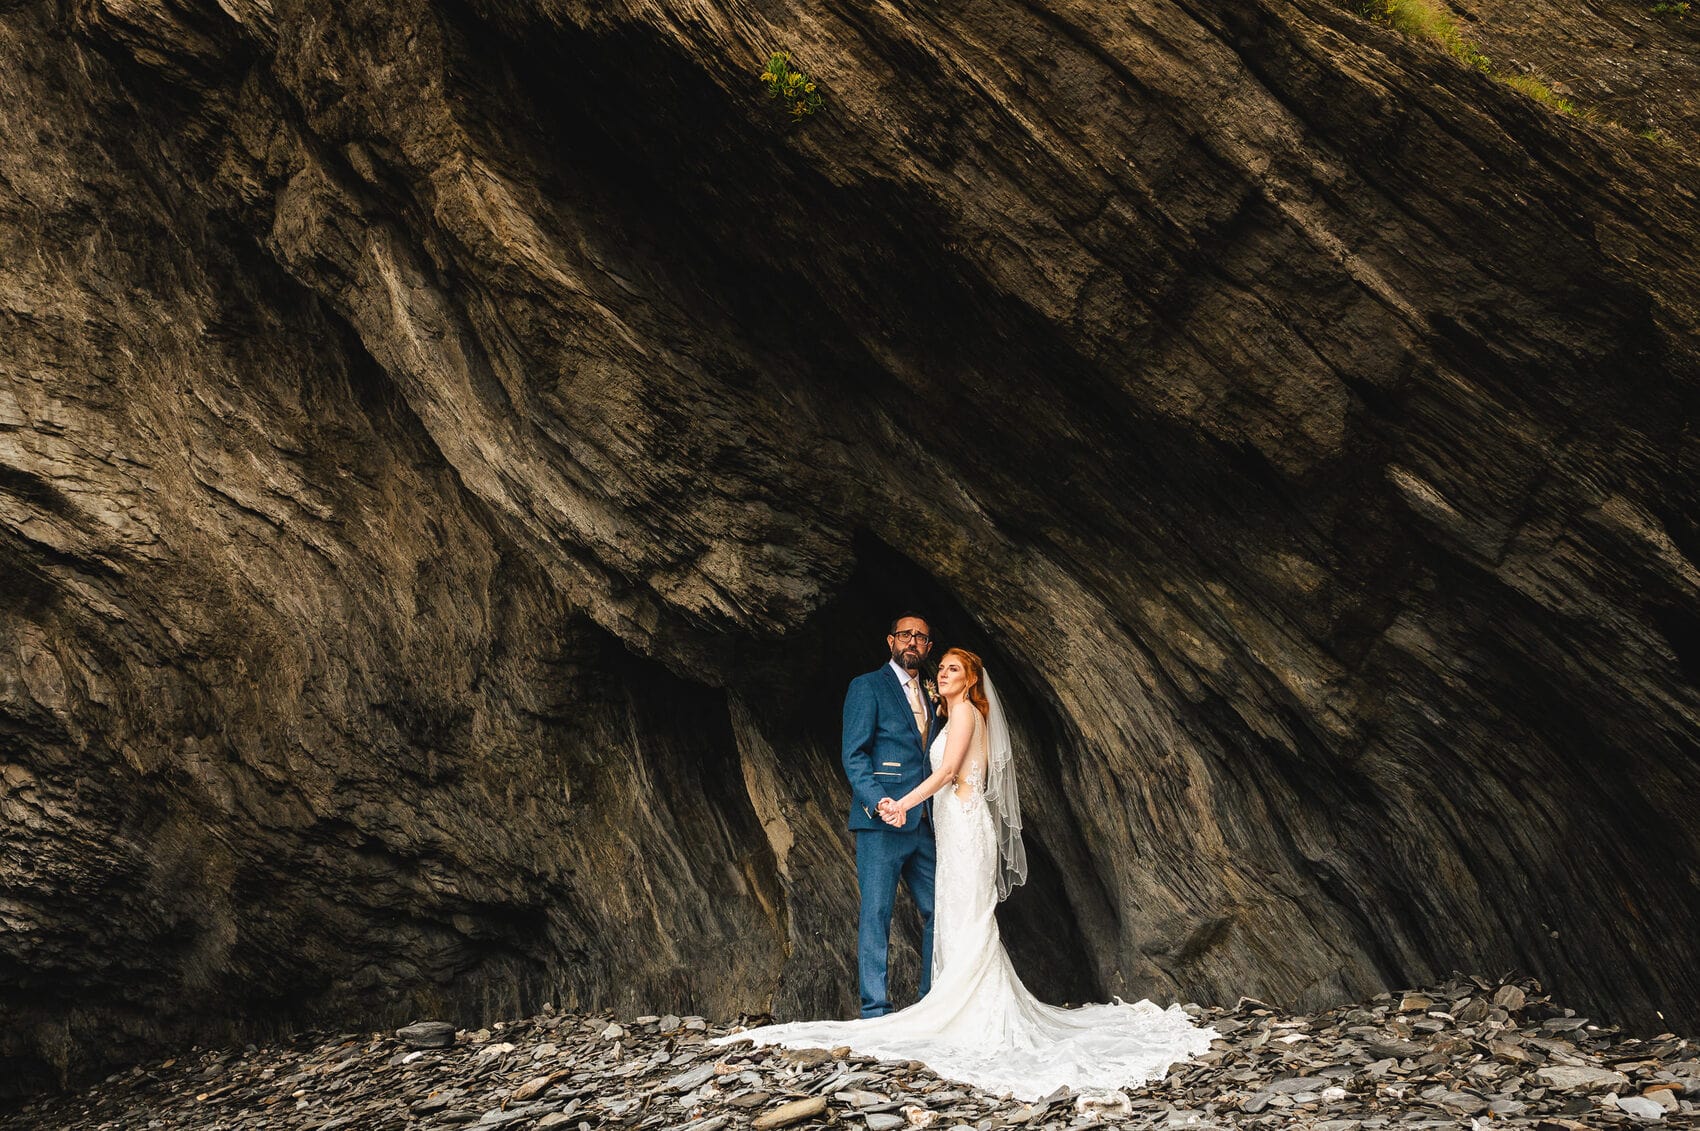 Tunnels Beaches Wedding venue - Bride and groom portrait